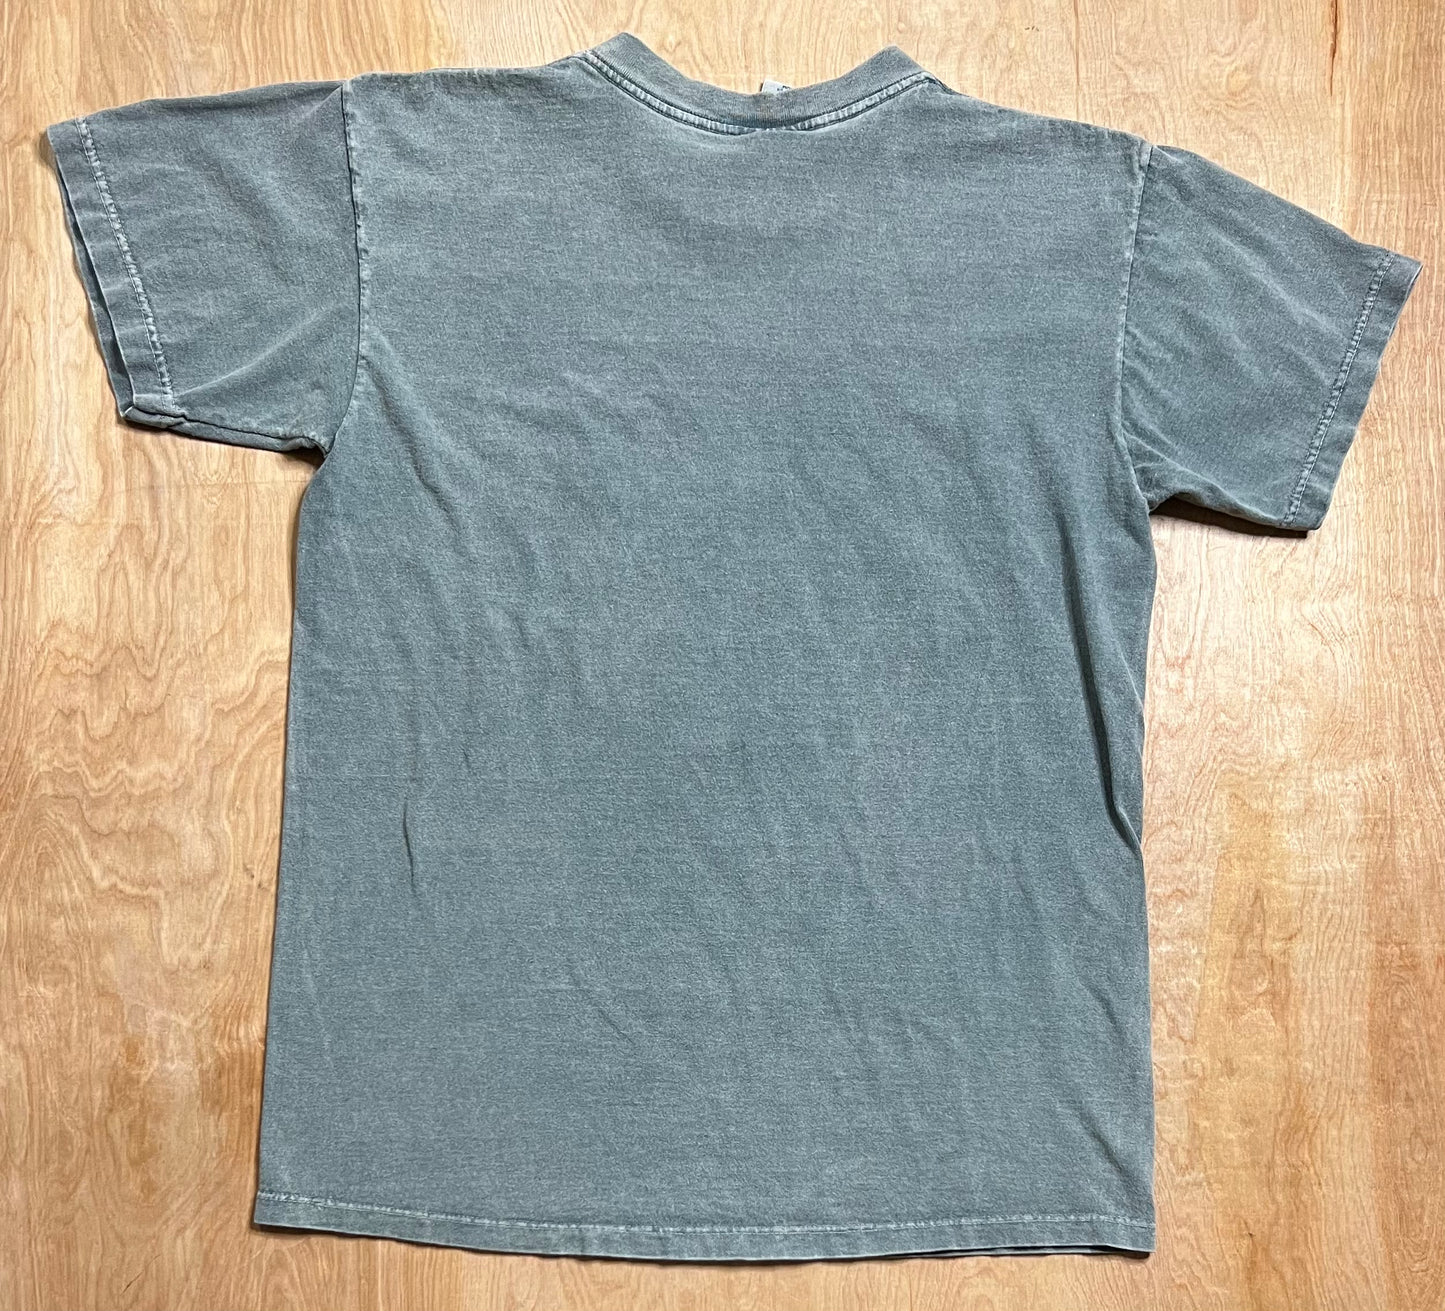 Vintage Whitefish Montana "The Big Mountains" T-Shirt